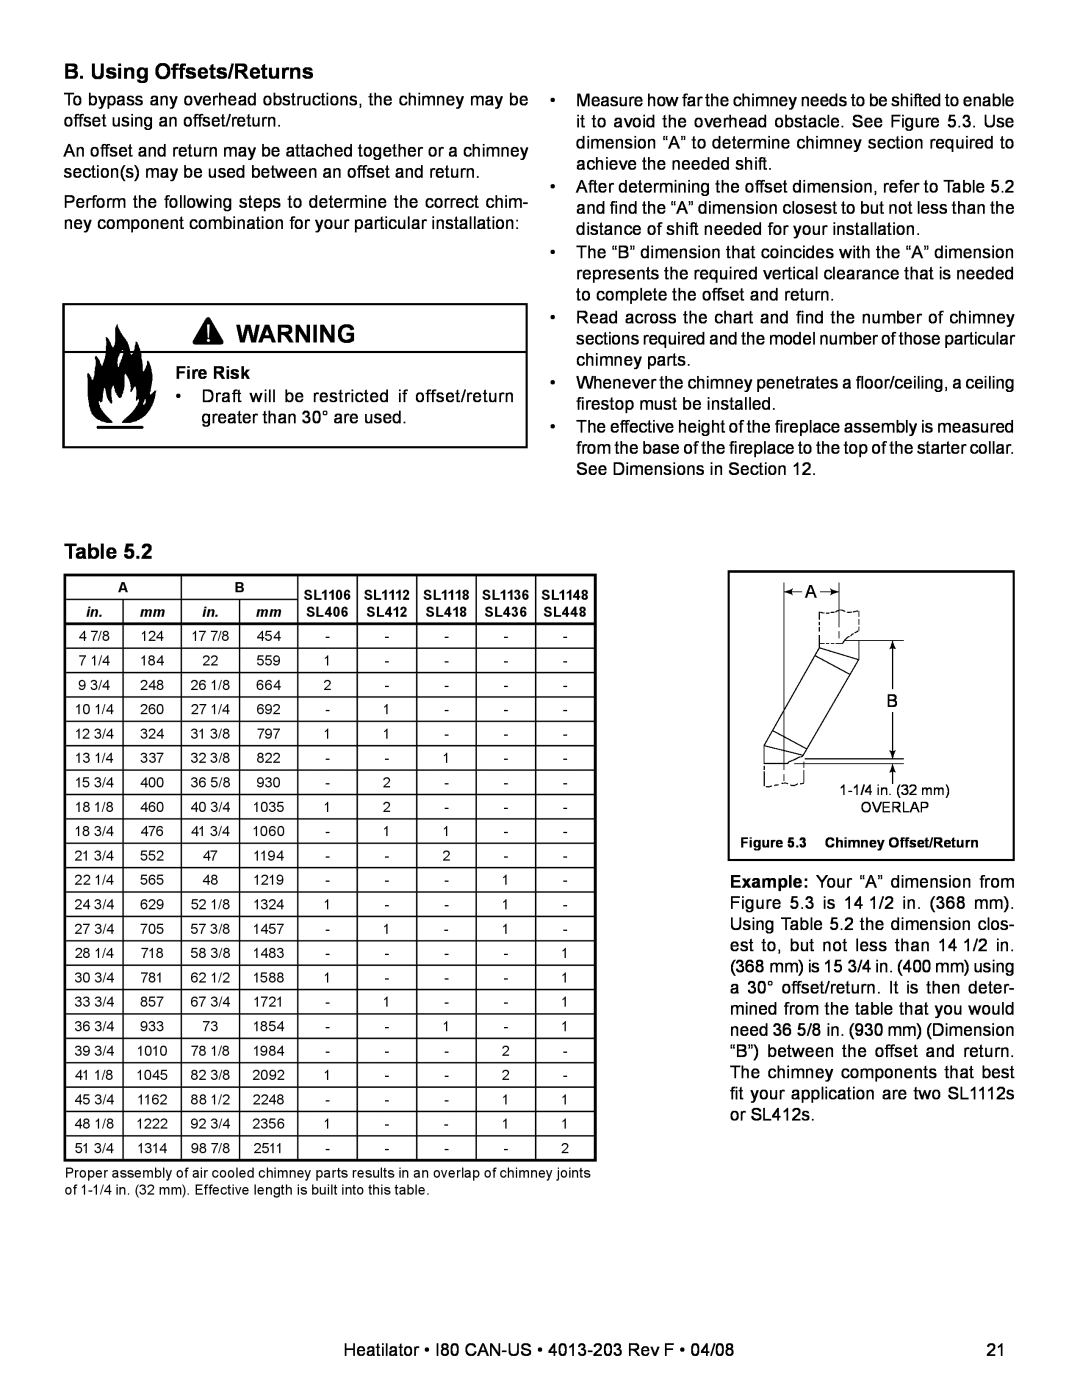 Heatiator I80 owner manual B. Using Offsets/Returns, Fire Risk 